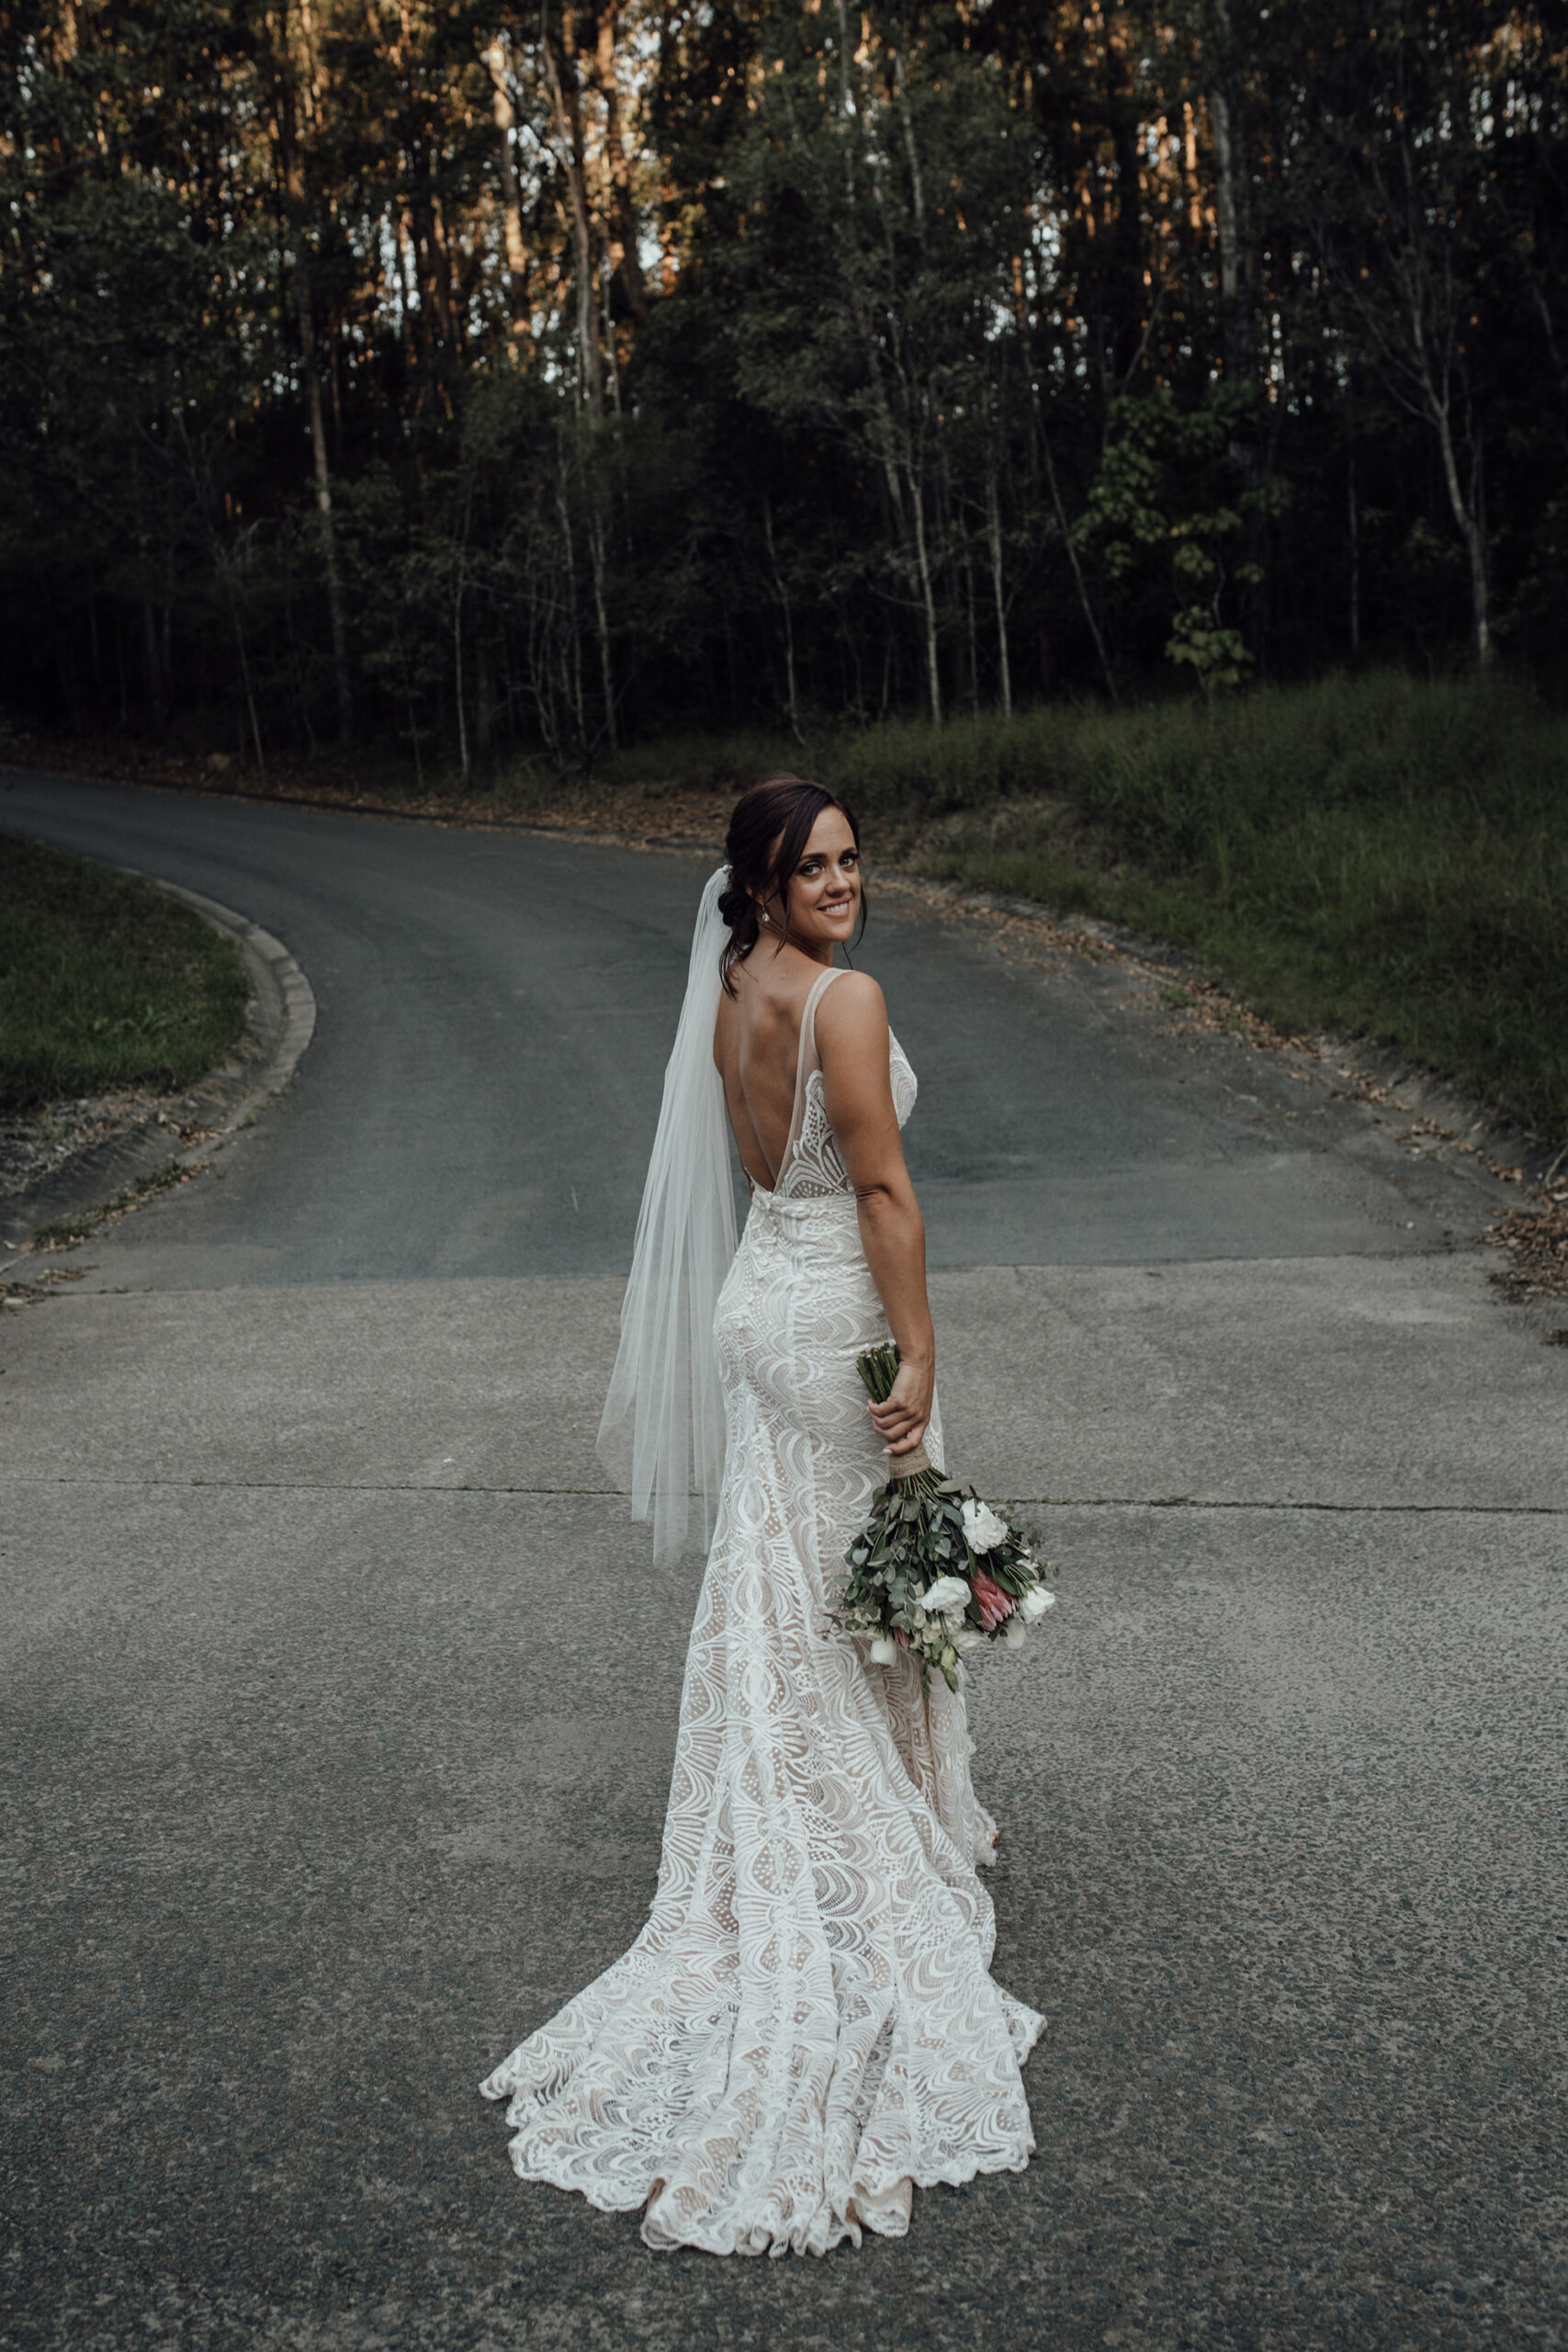 Tegan Mitch Rustic Bohemian Wedding Florin Lane Photography SBS 026 scaled